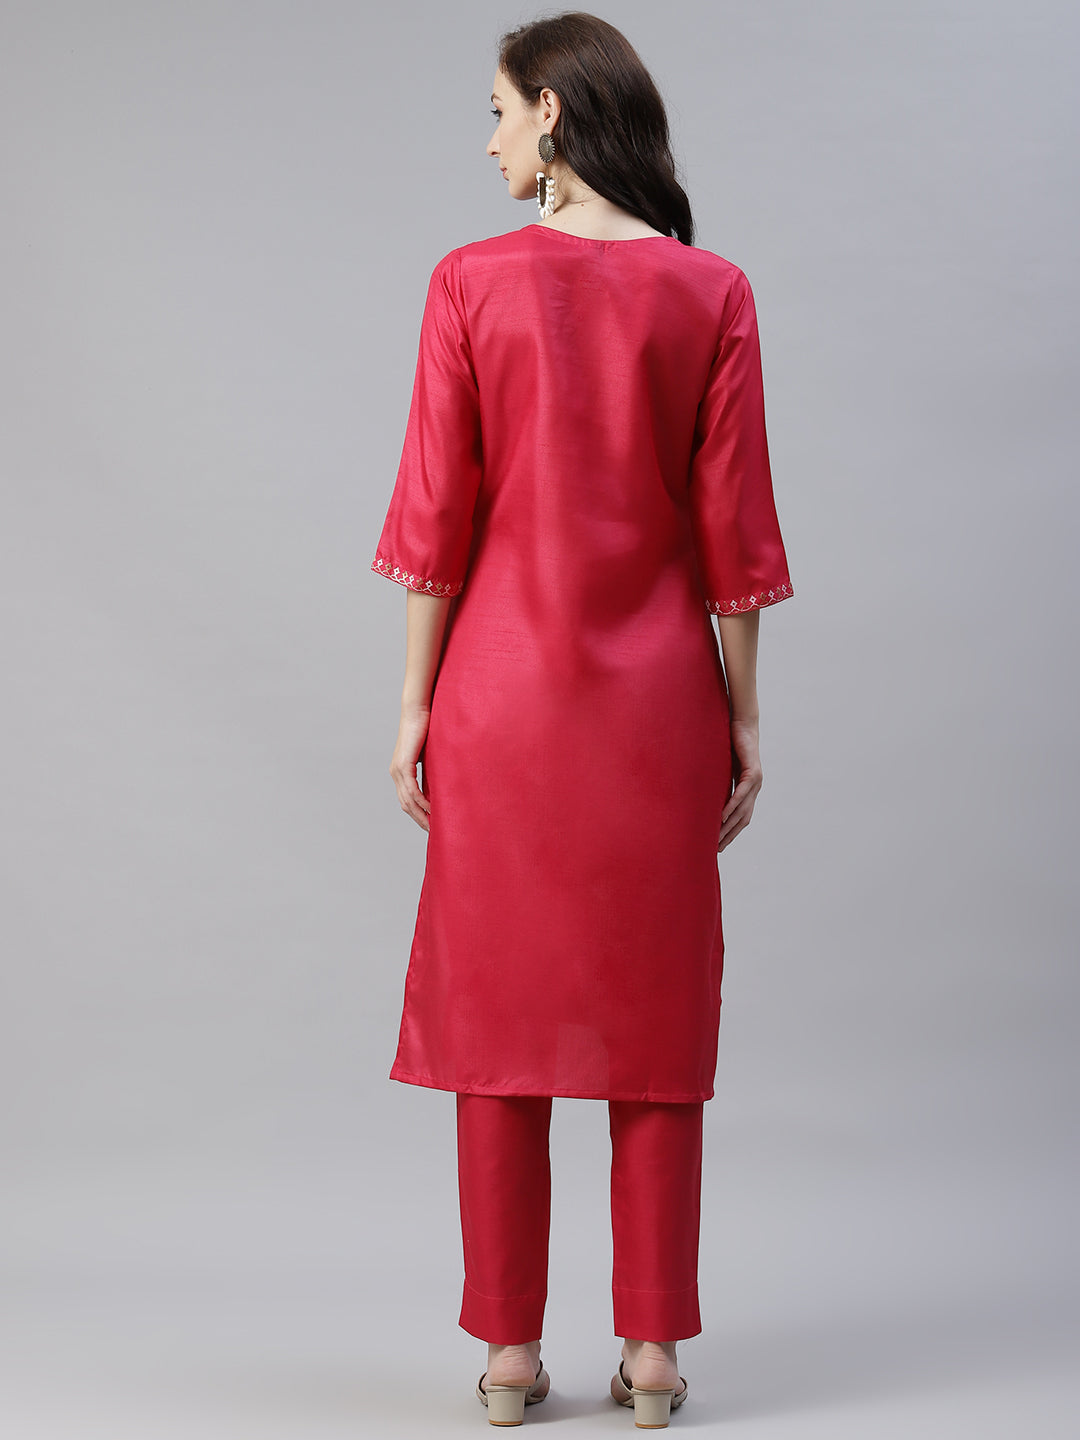 Women Pink Printed Kurta and Pant Set by Ziyaa (2 Pc Set) - Final Clearance Sale